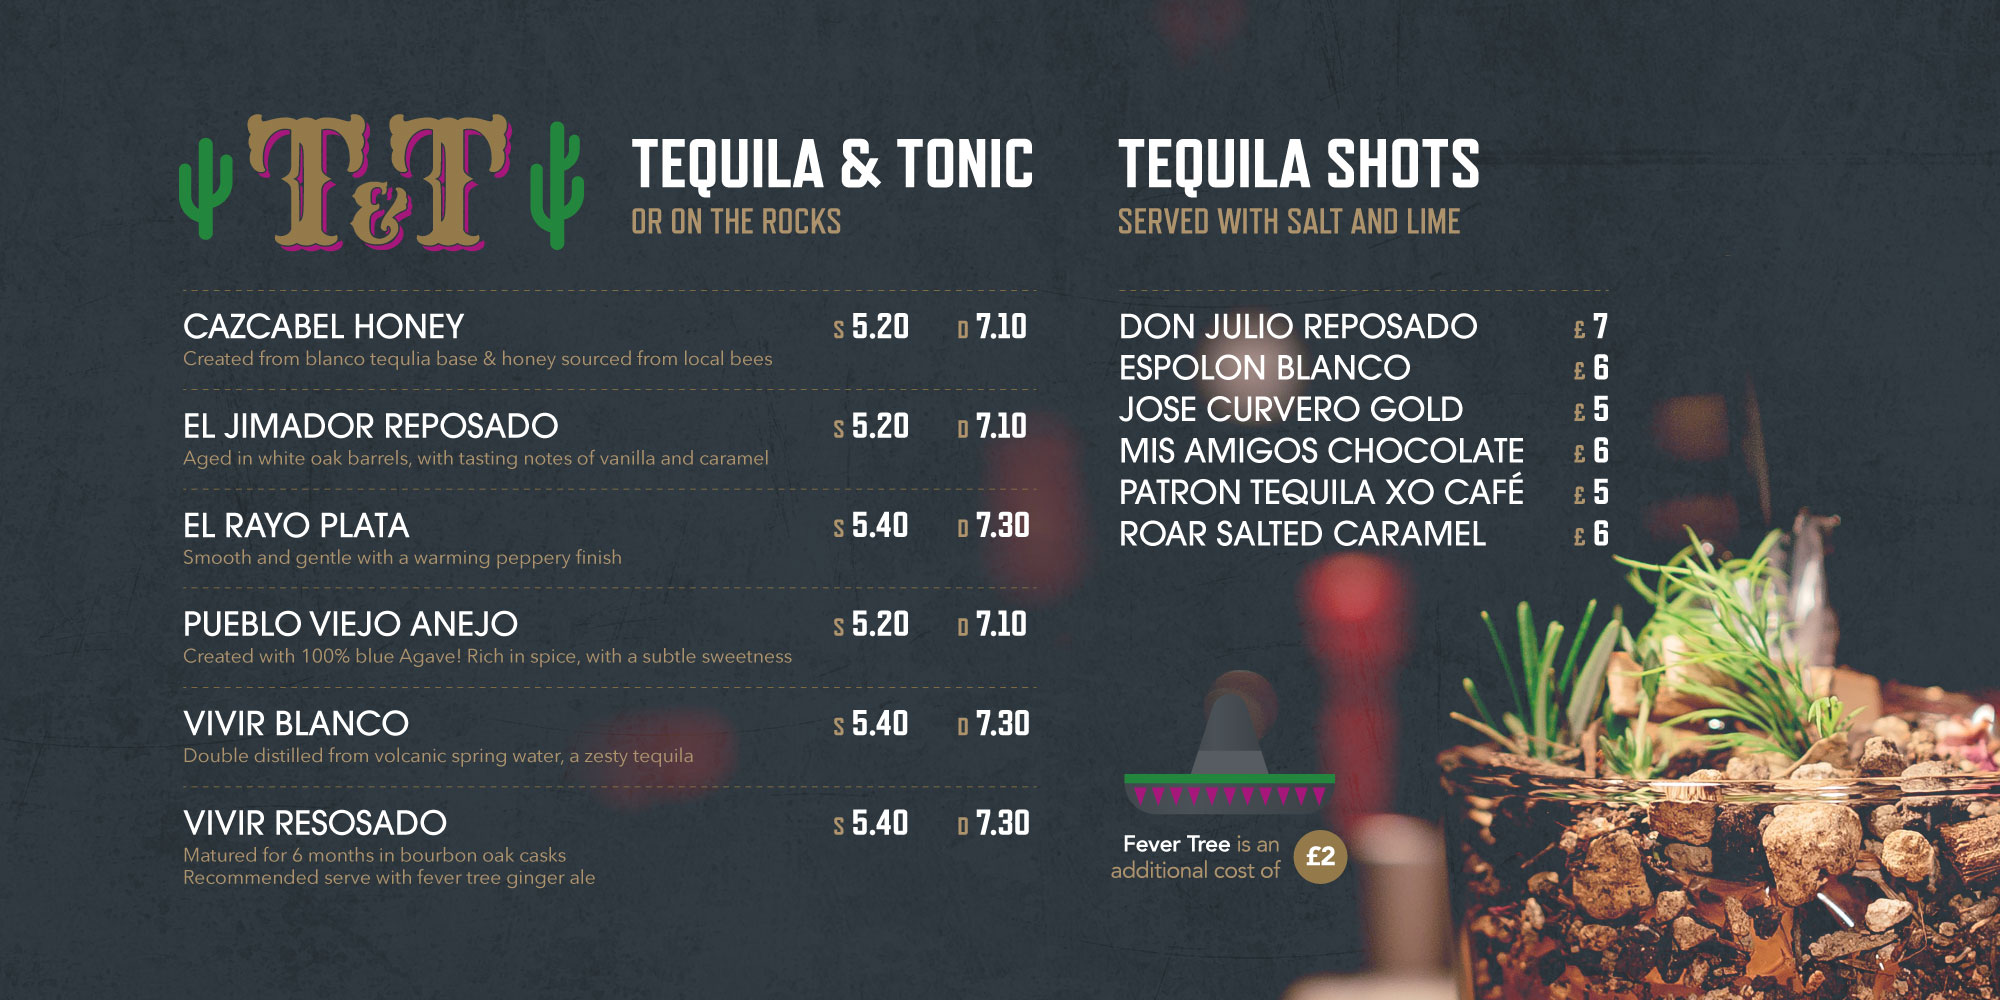 Tequila & Tonic